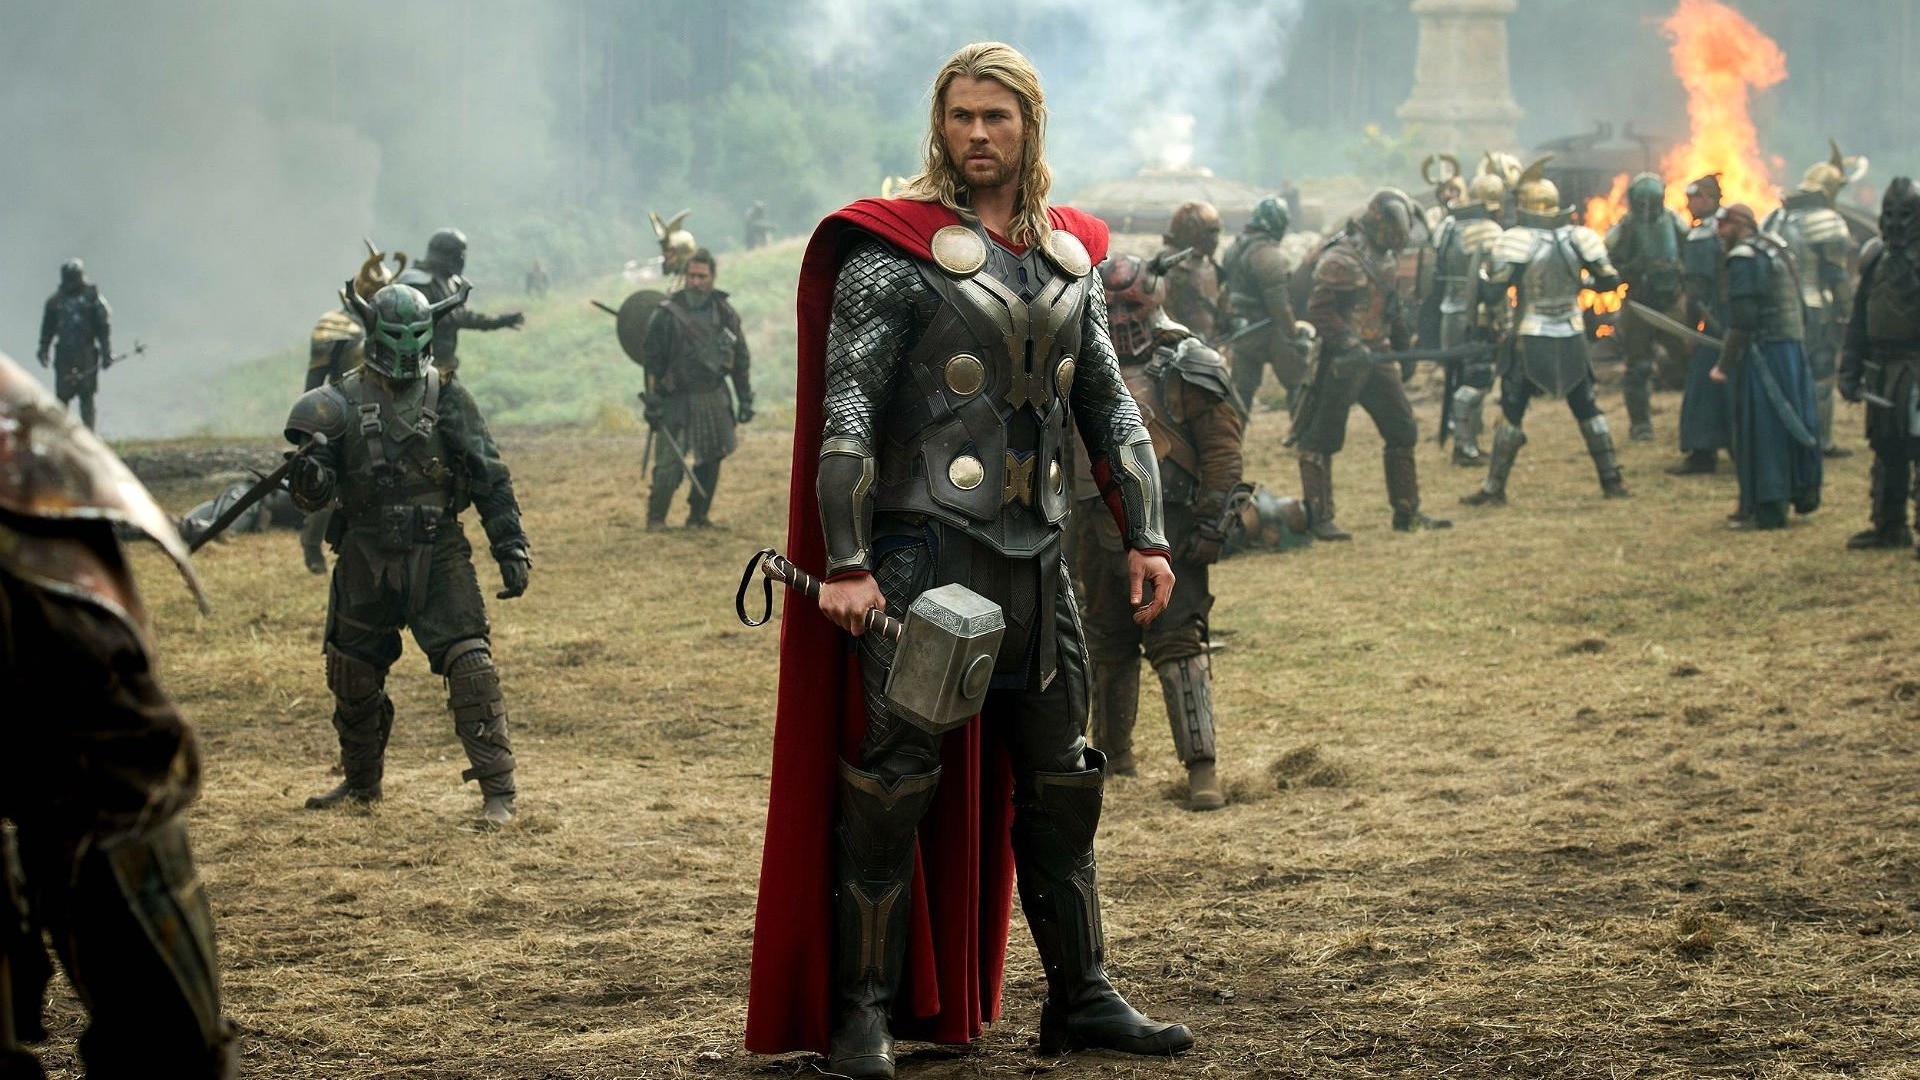 People 1920x1080 Thor Thor 2: The Dark World Mjolnir Chris Hemsworth Marvel Cinematic Universe movies hammer superhero movie scenes